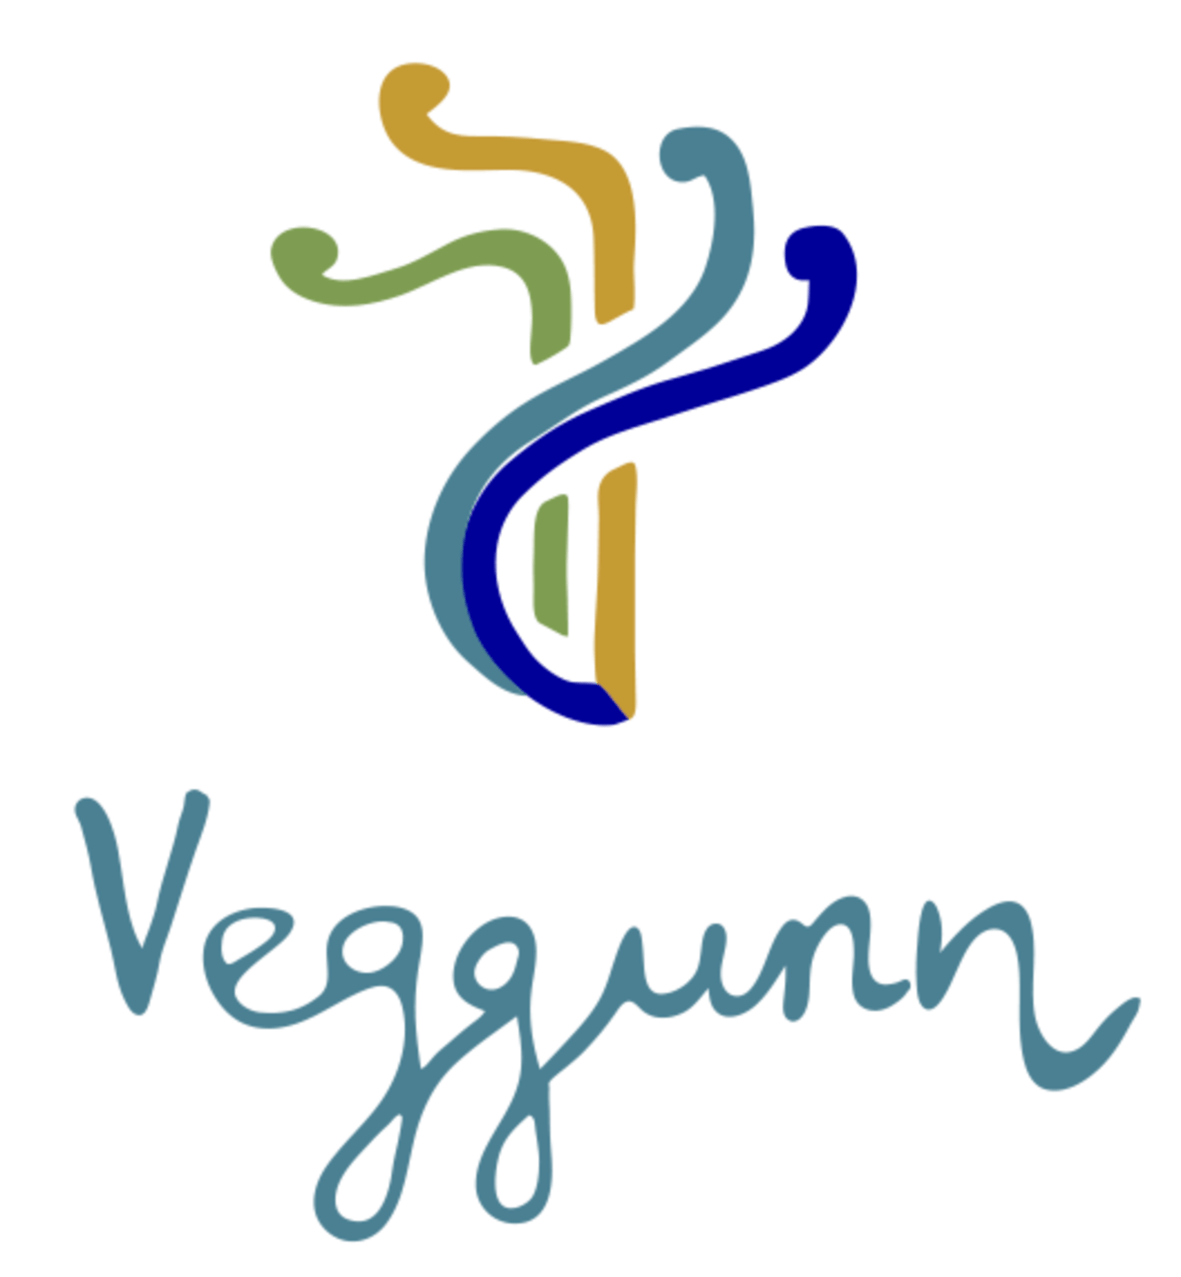 Veggunn logo transparente